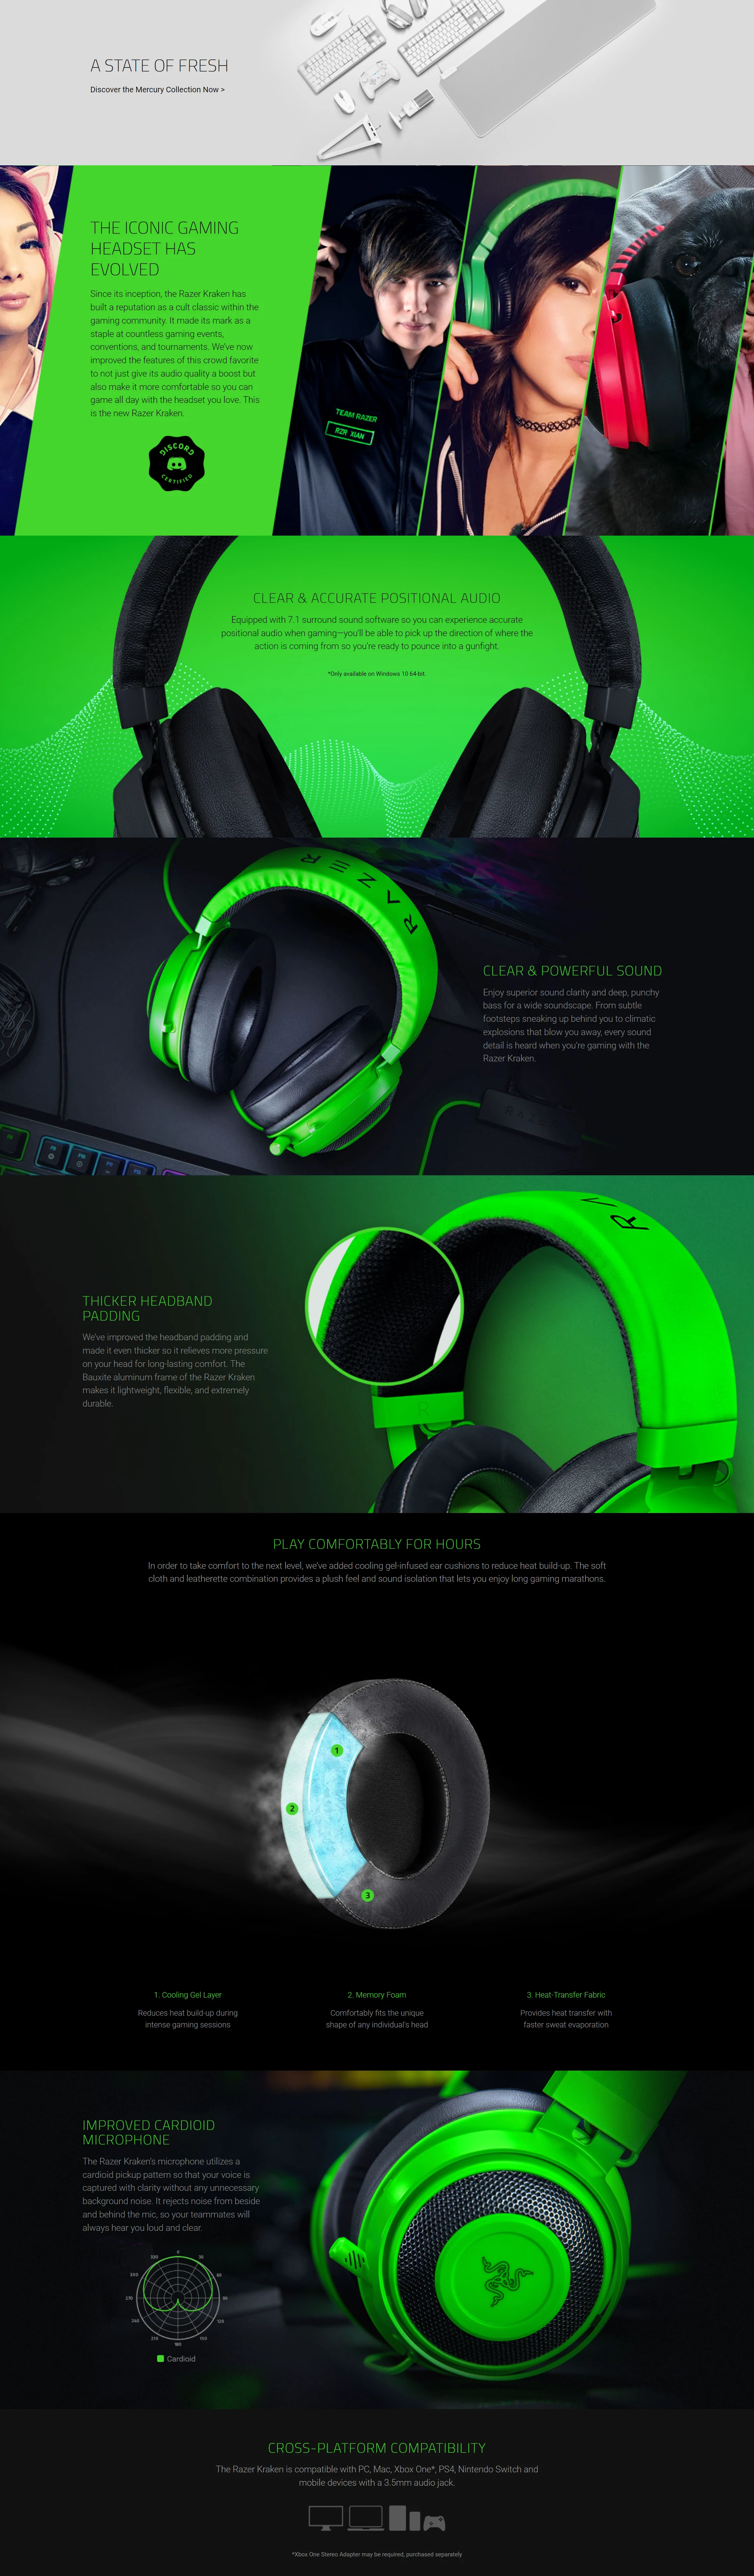 Overview - Razer Kraken Multi-Platform Wired Gaming Headset - Green